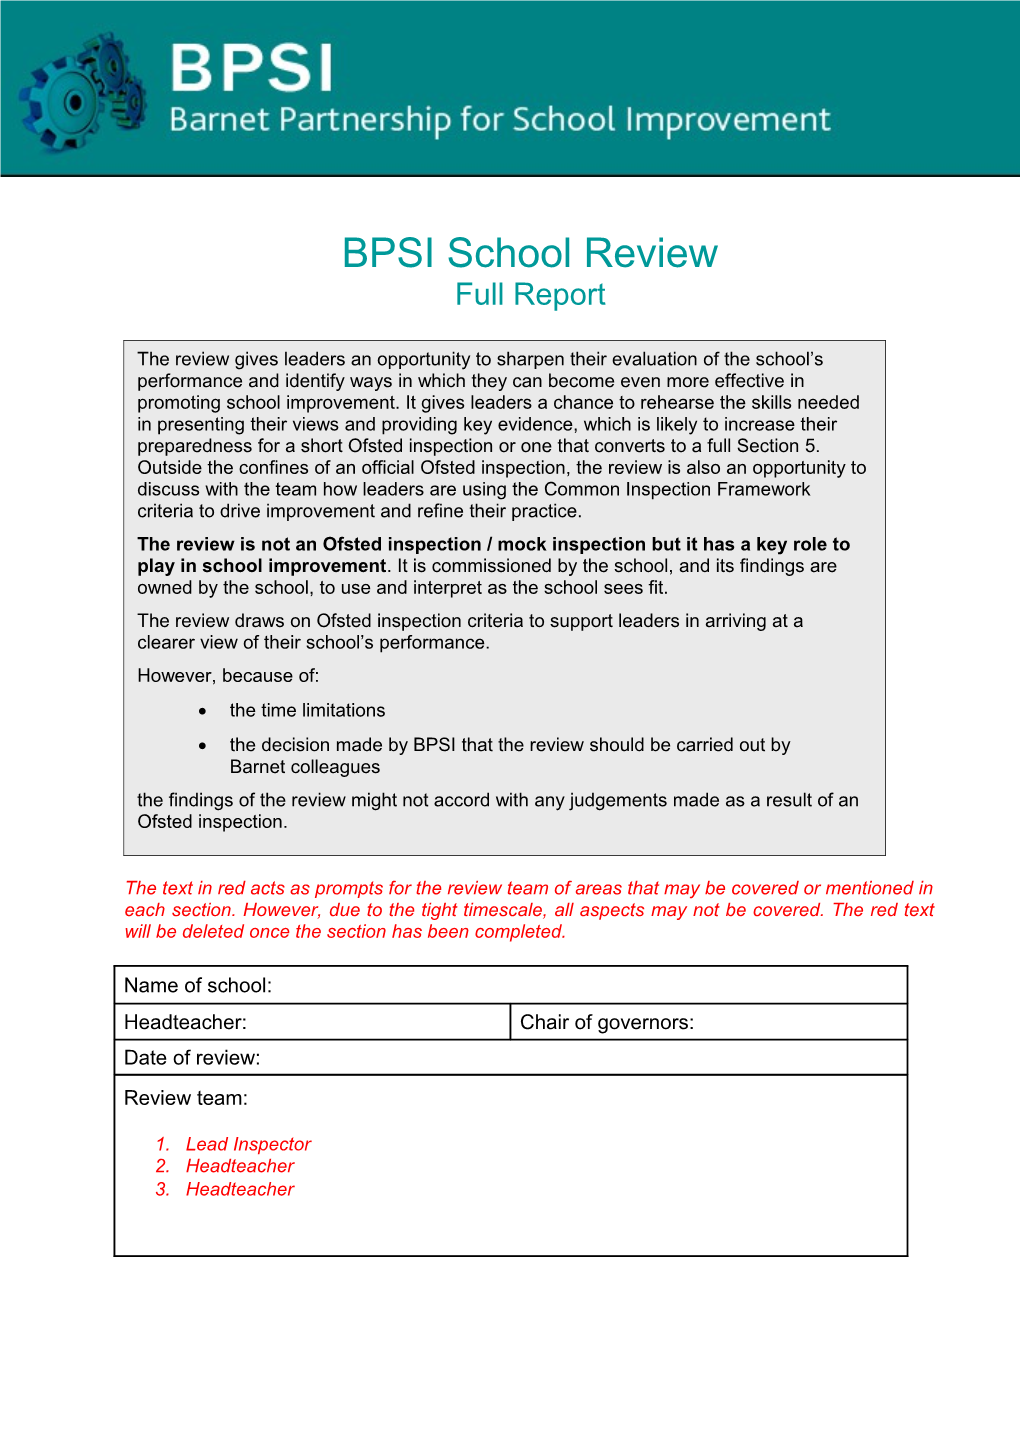 BPSI School Review